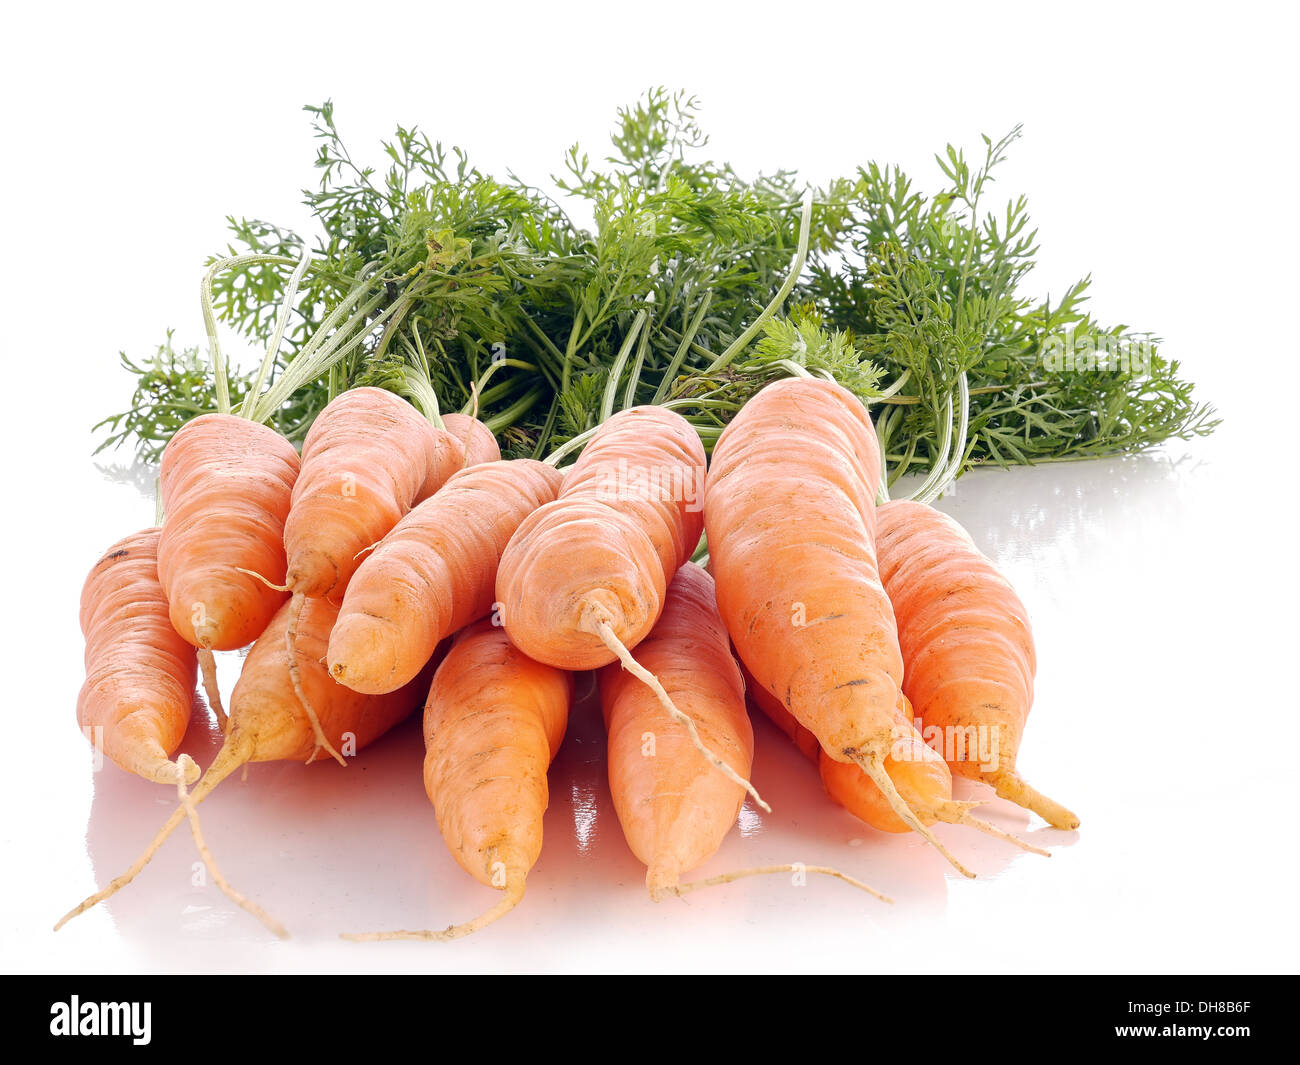 Bunch of fresh carrots shot on white Stock Photo